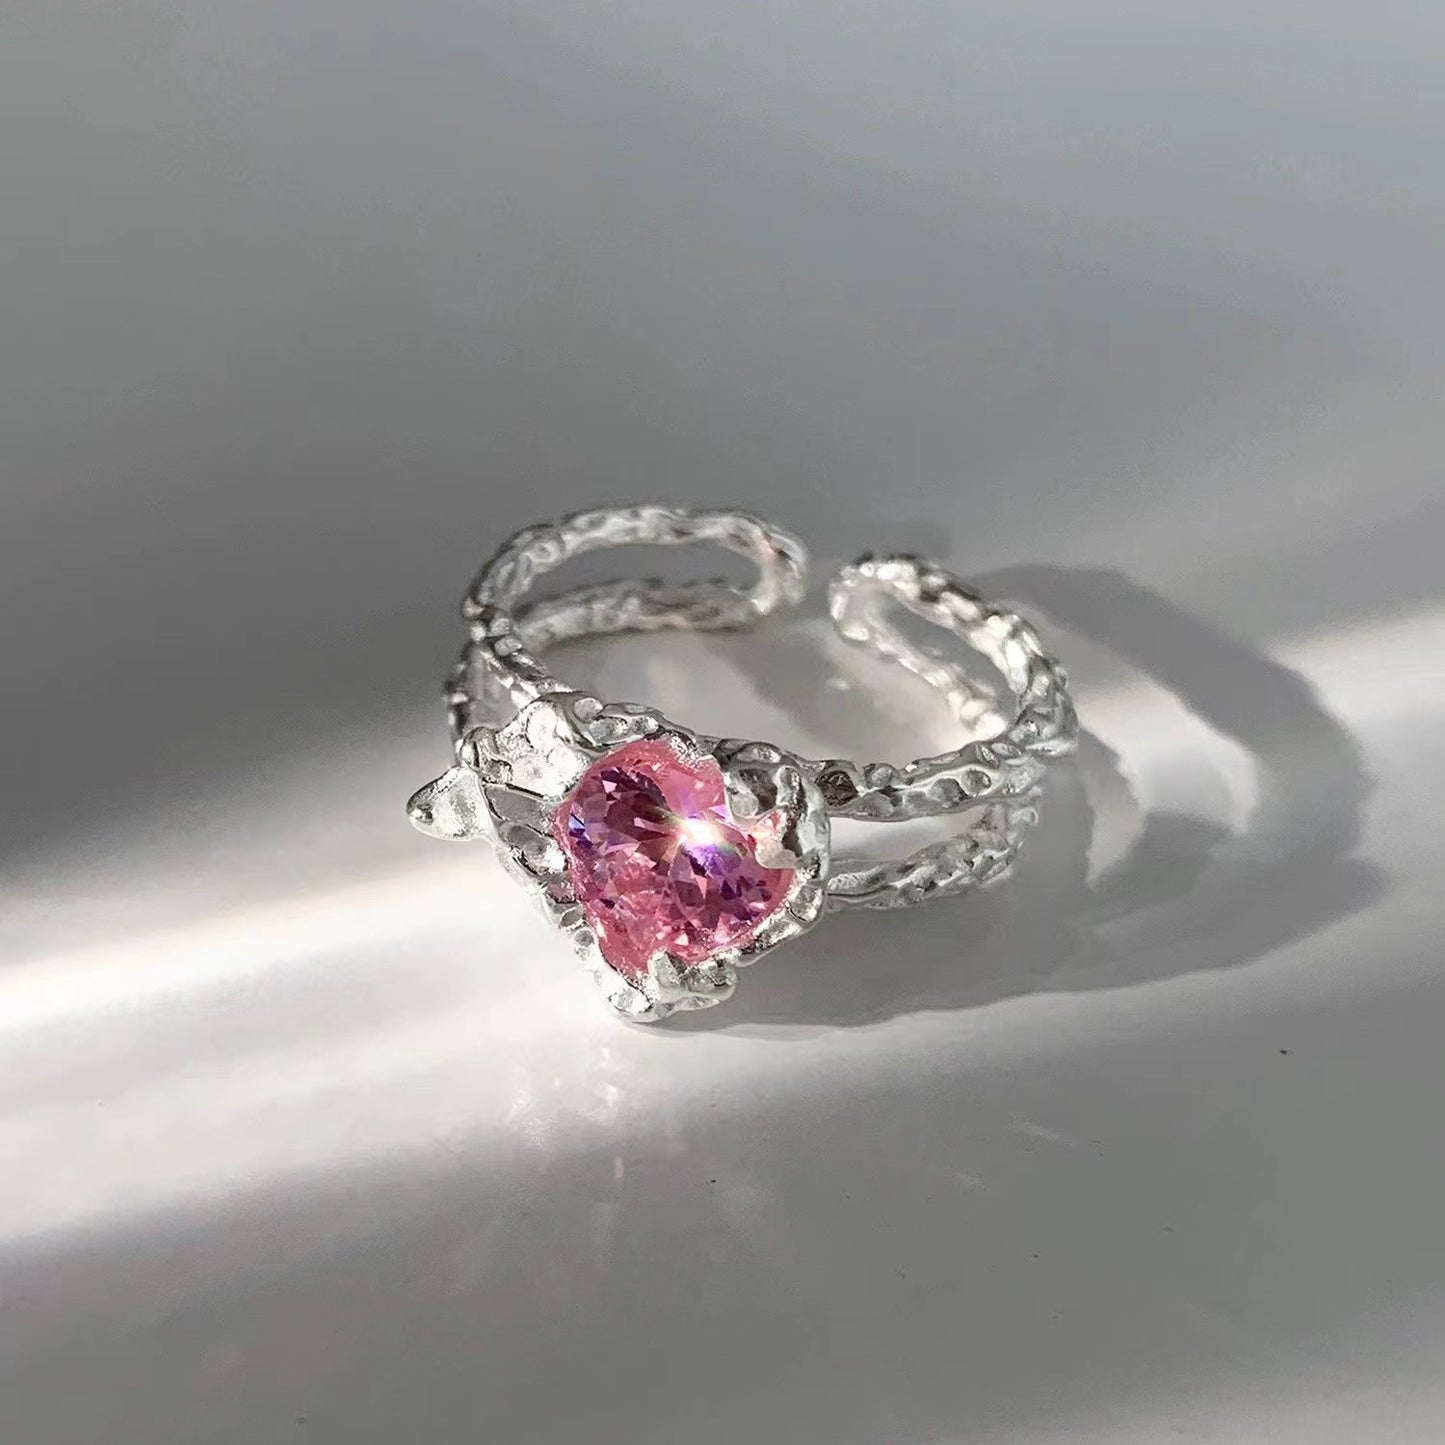 Niche design sense ins wind moonstone ring female love gemstone opening senior sense pink diamond zircon finger ring tide